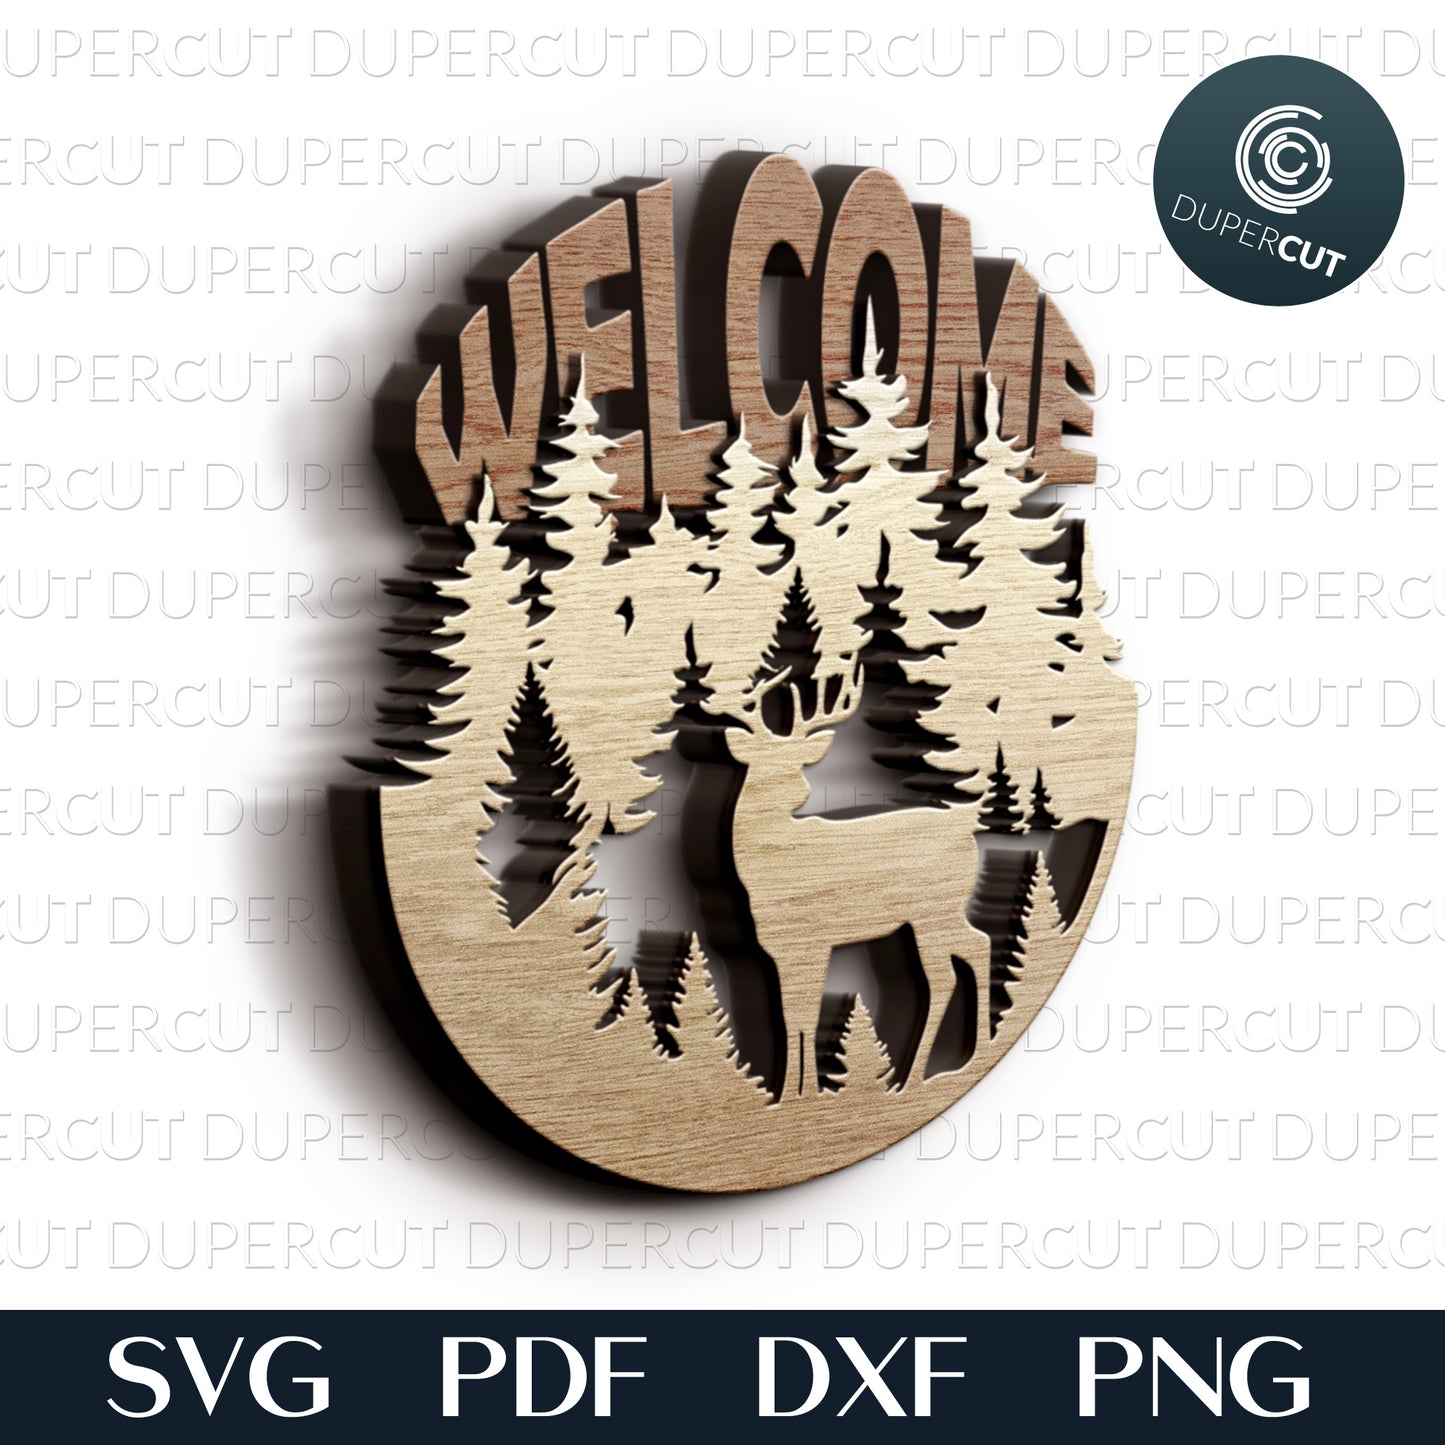 Wilderness scene deer Dual layer files. SVG PDF DXF cutting template for laser cutting, engraving, Glowforge, Cricut, Silhouette, CNC plasma